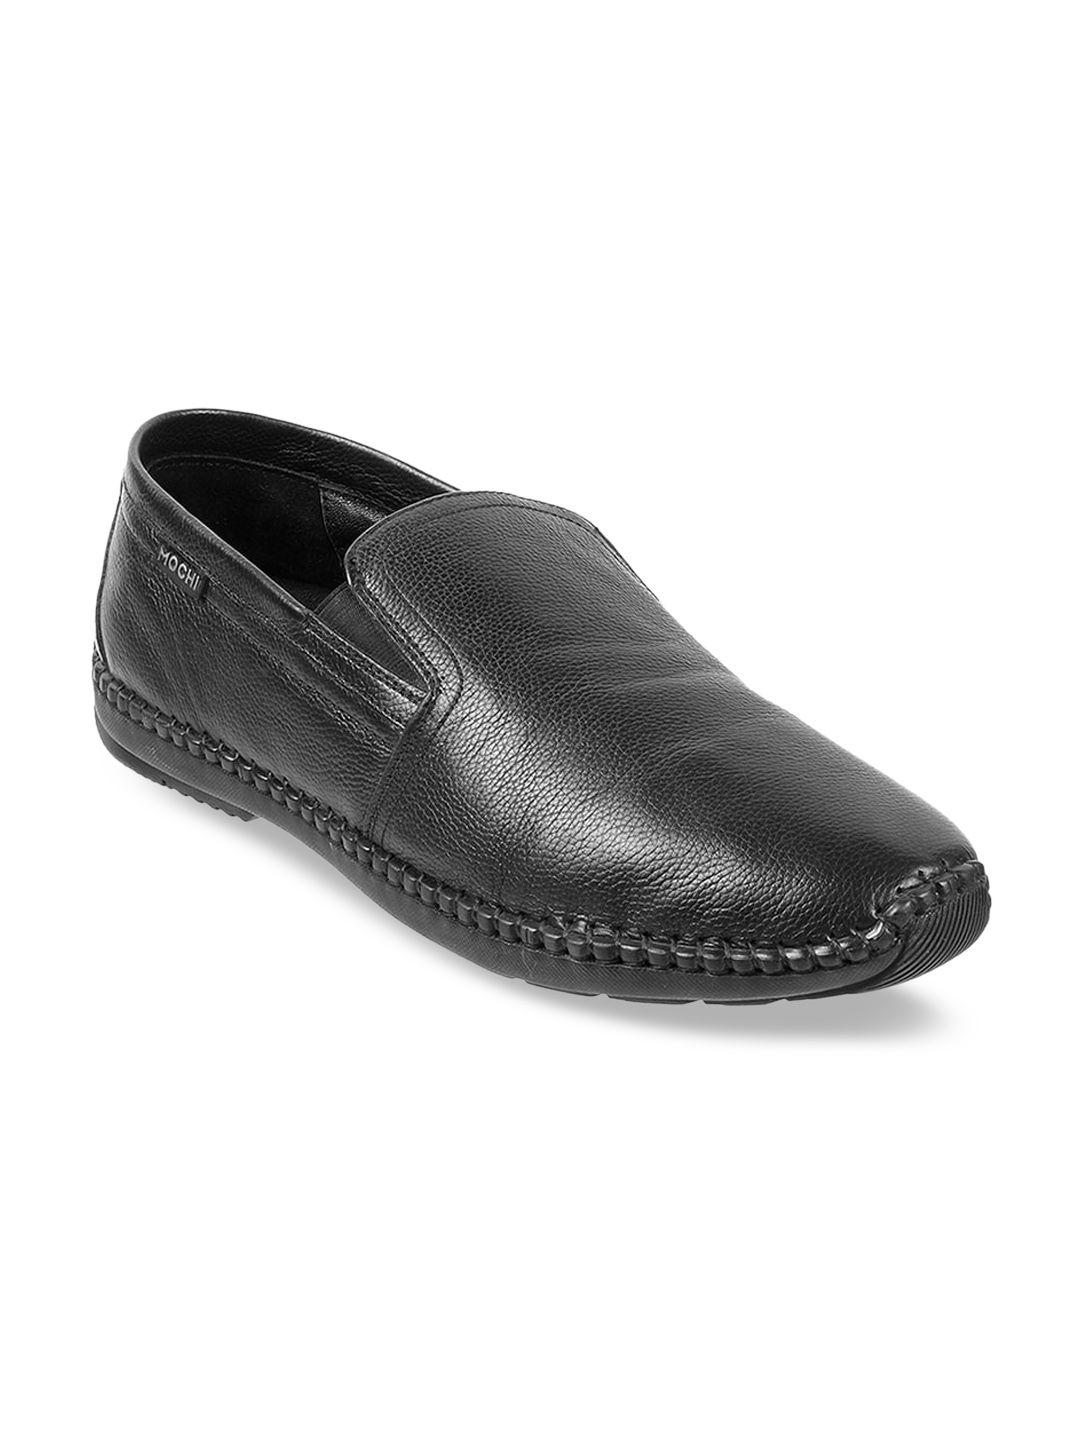 Mochi Men Textured Leather Formal Slip-On Shoes